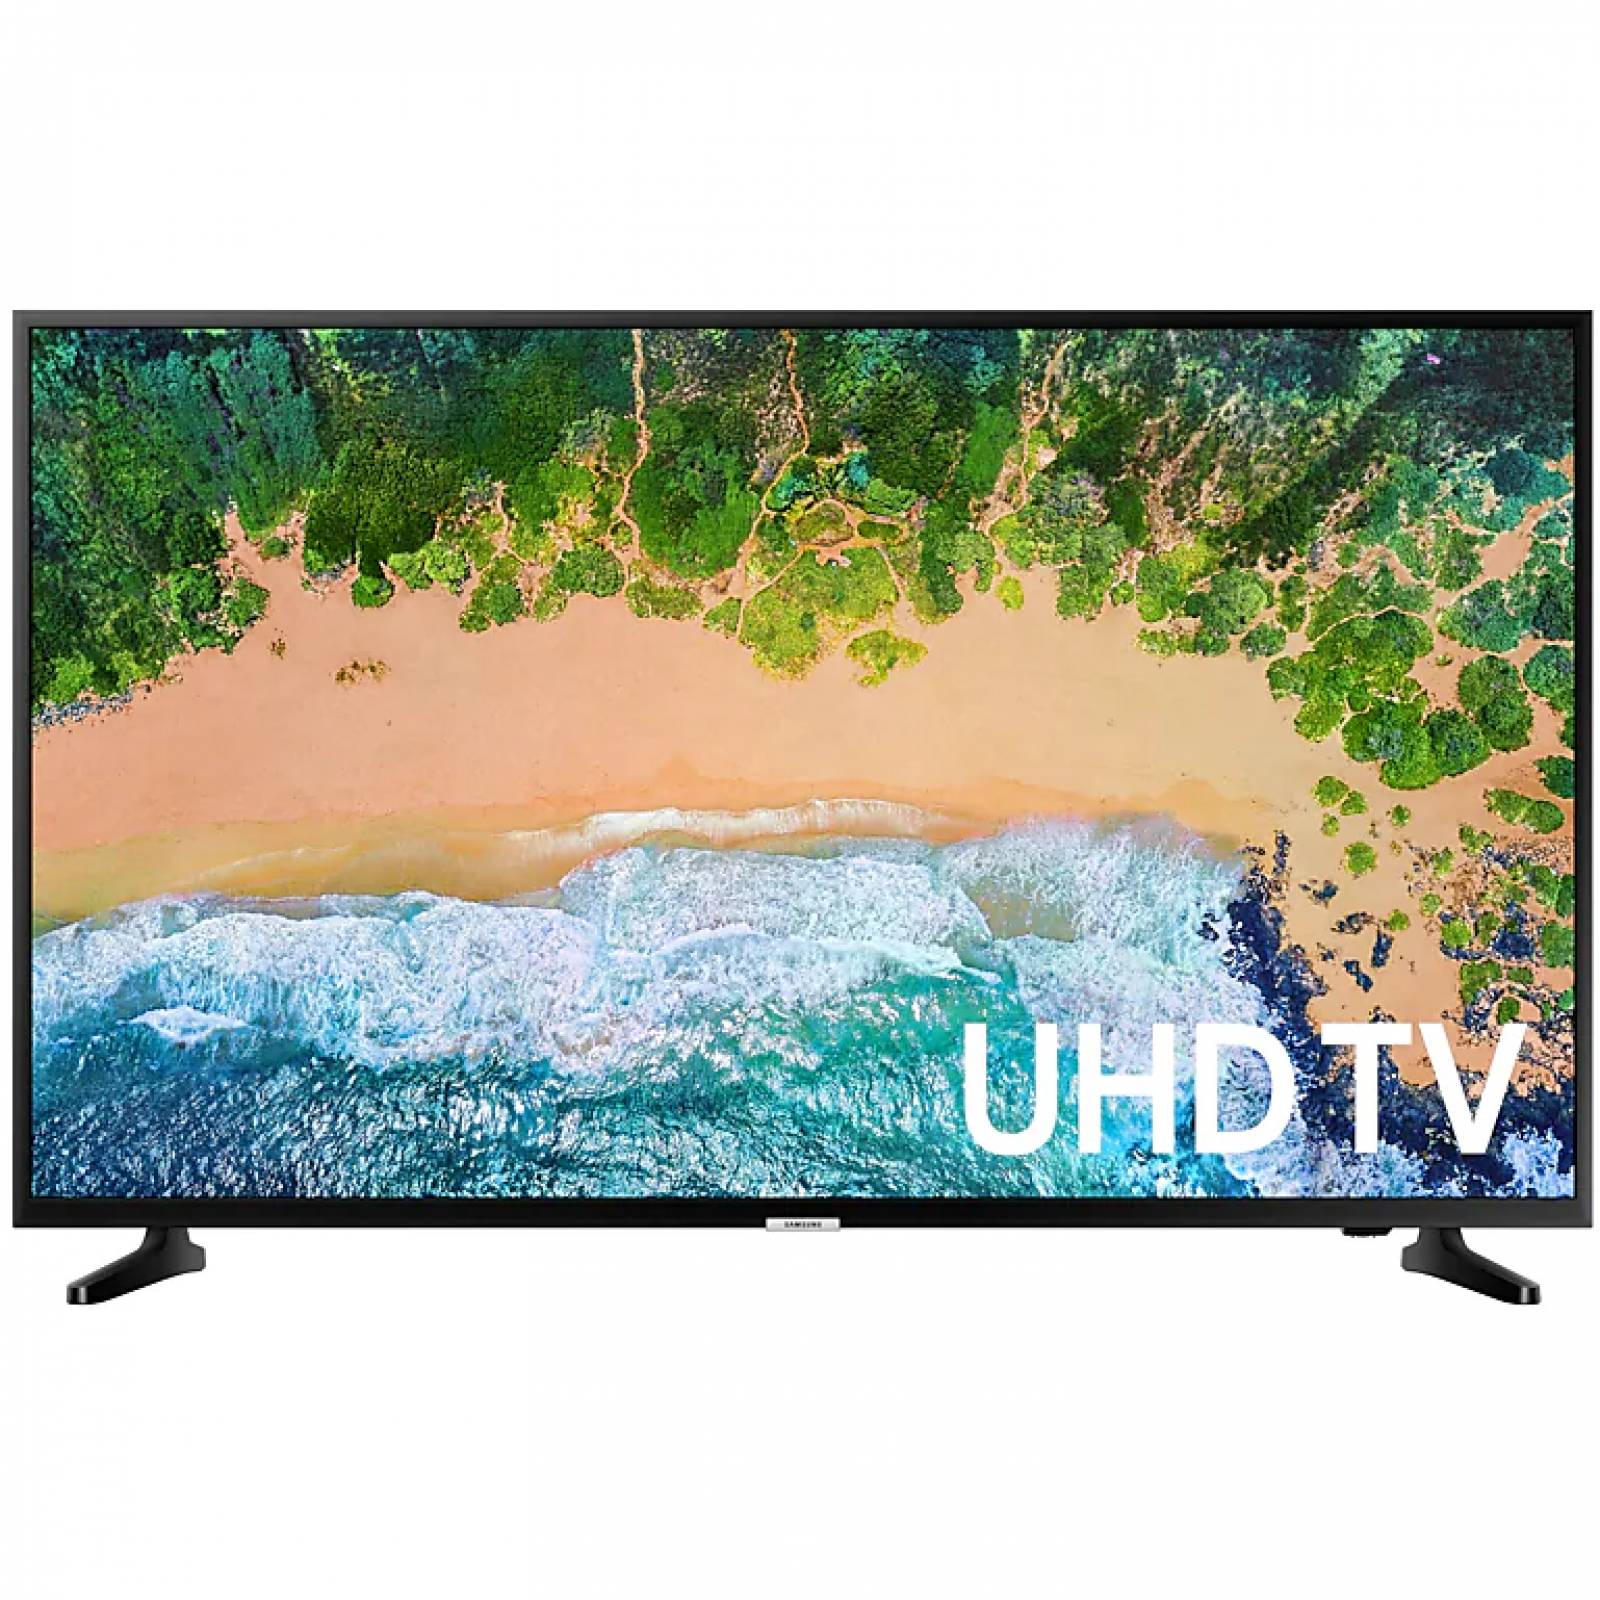 Smart TV Samsung 50 LED 4K UHD HDR PurColour UN50NU7090